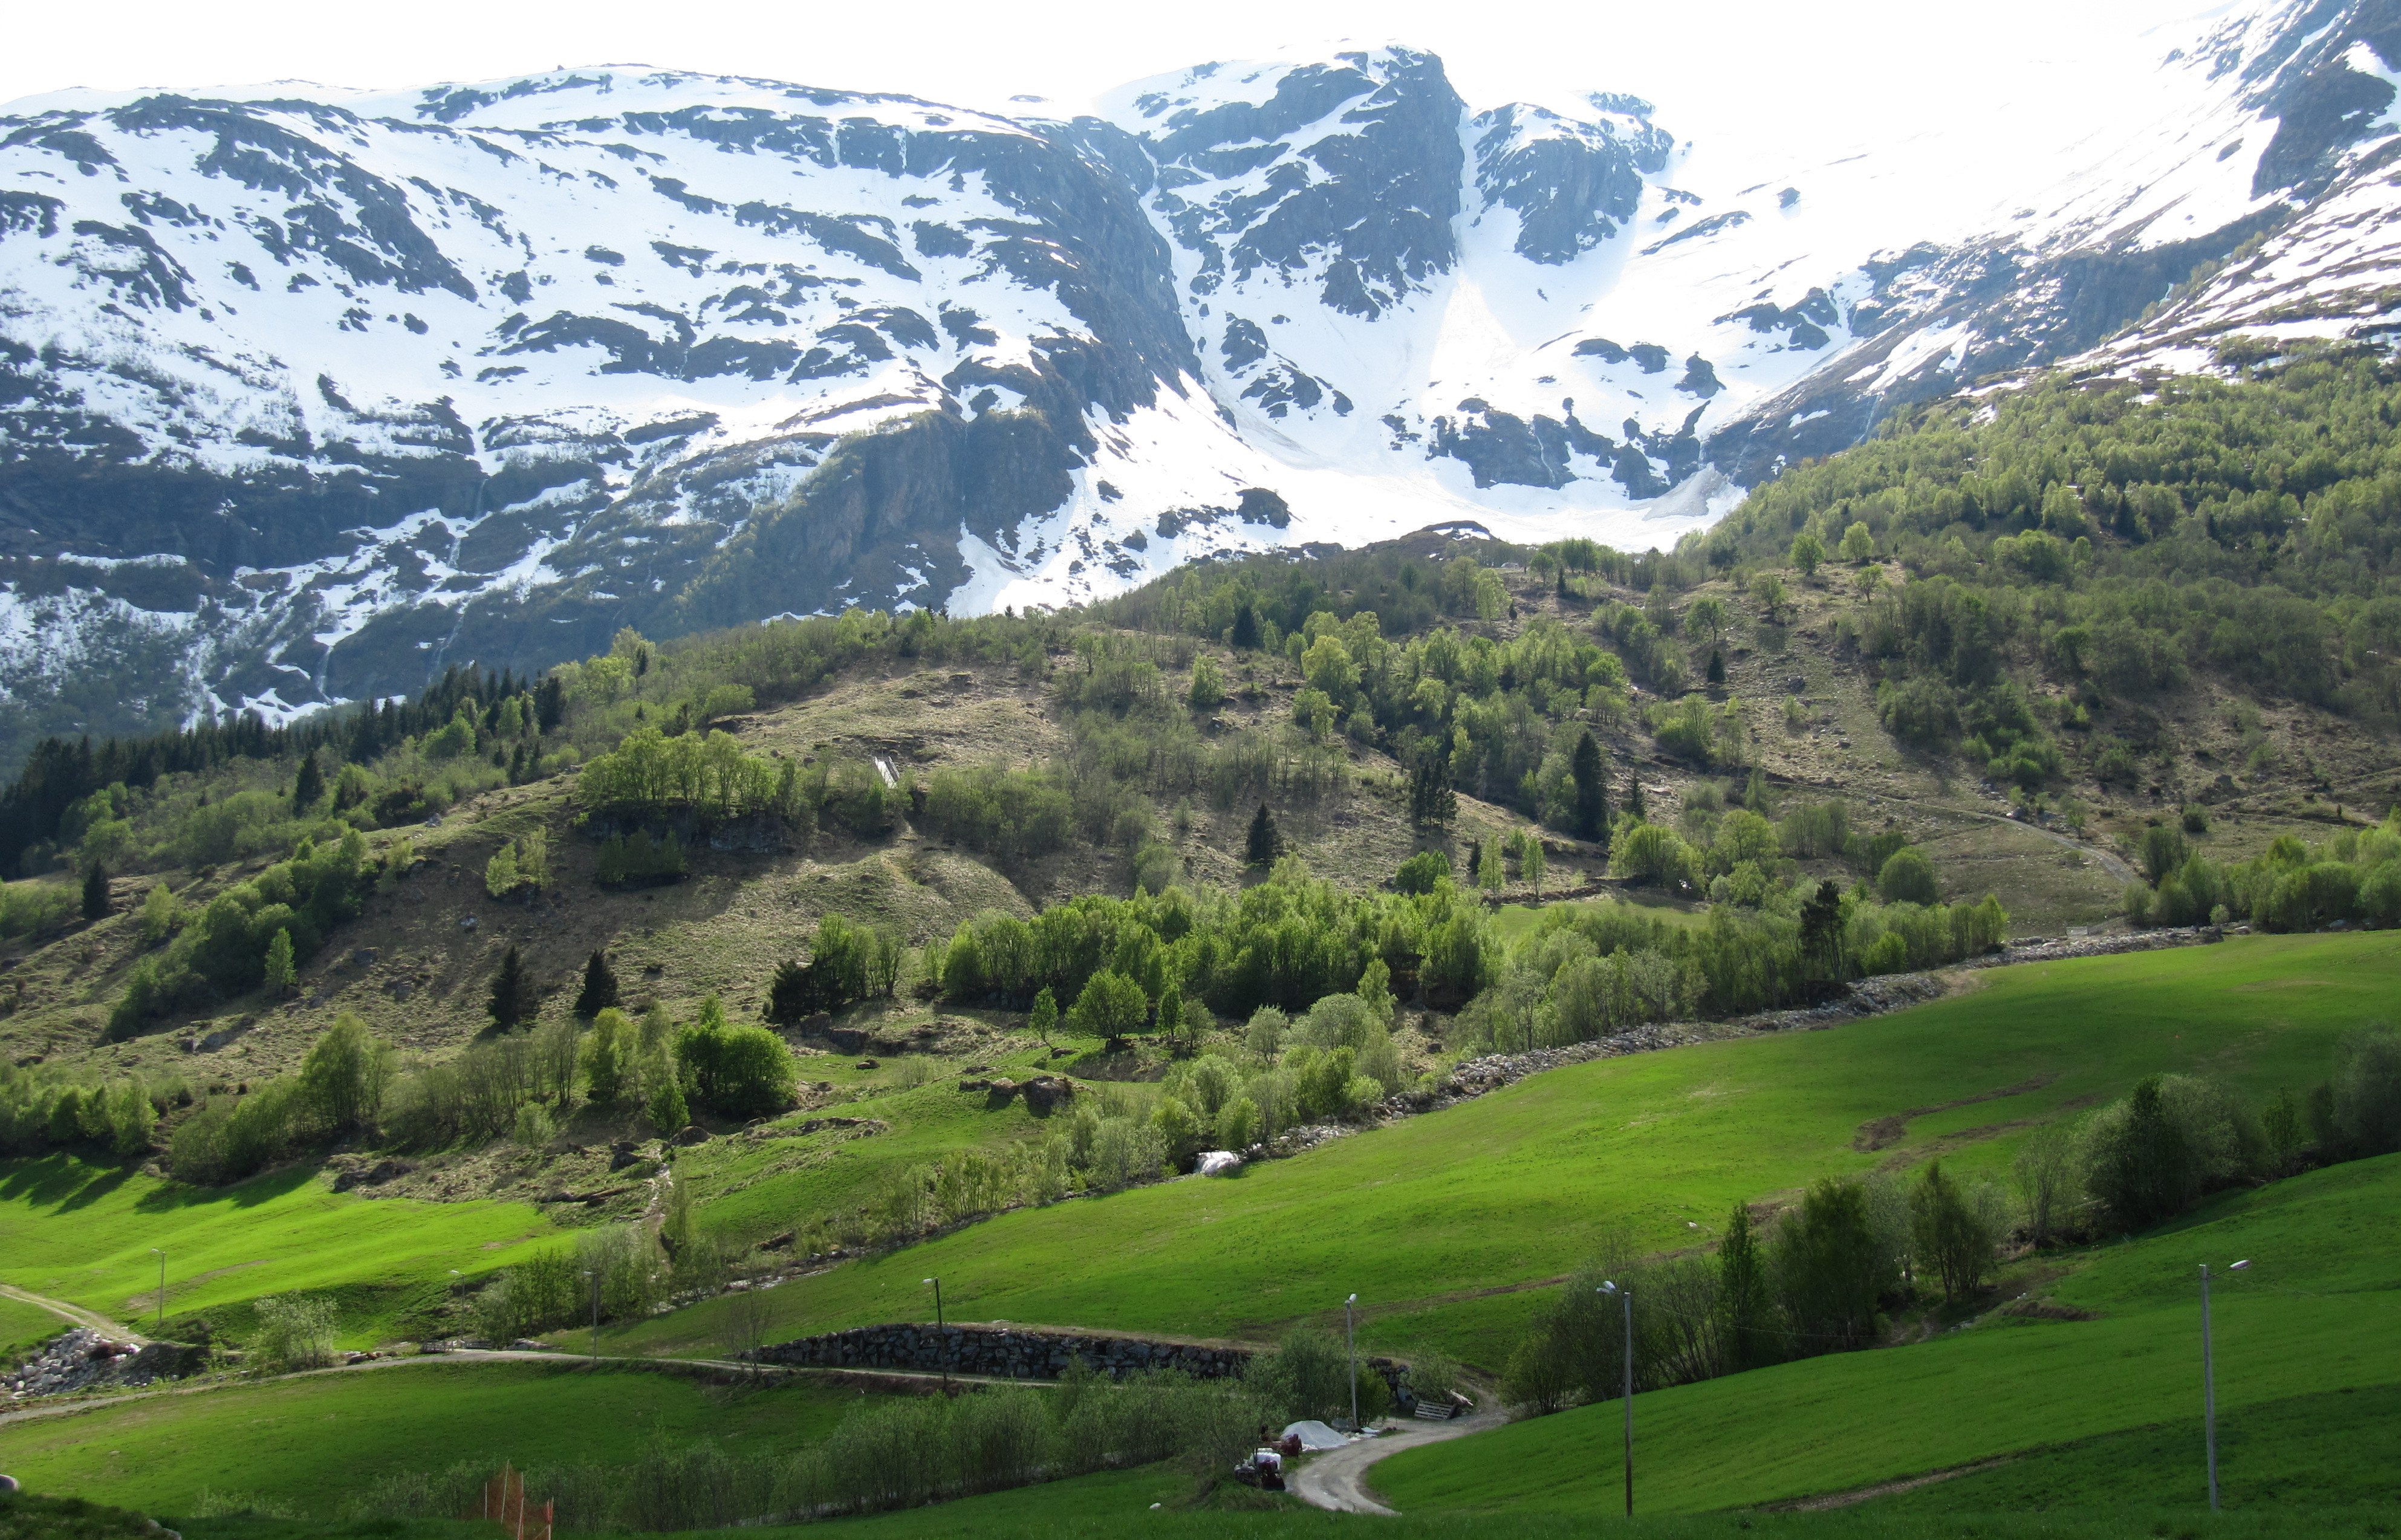 Skredløypa - the avalanche trail